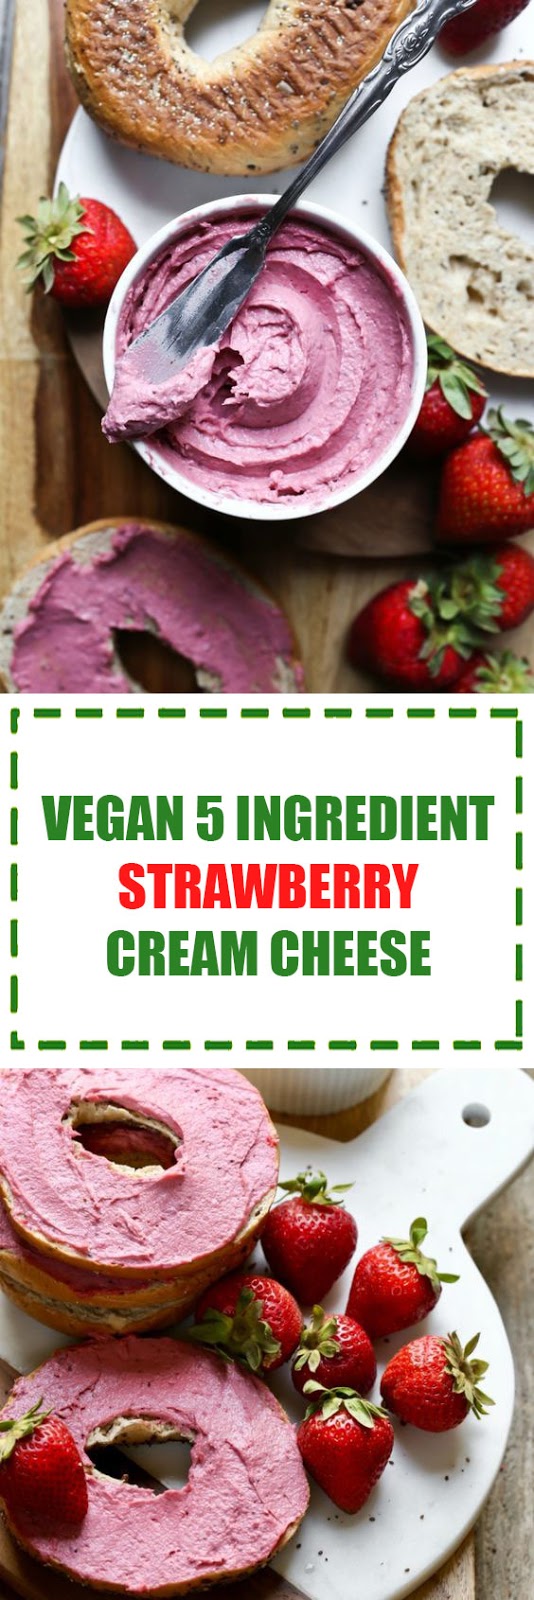 Vegan 5 Ingredient Strawberry Cream Cheese